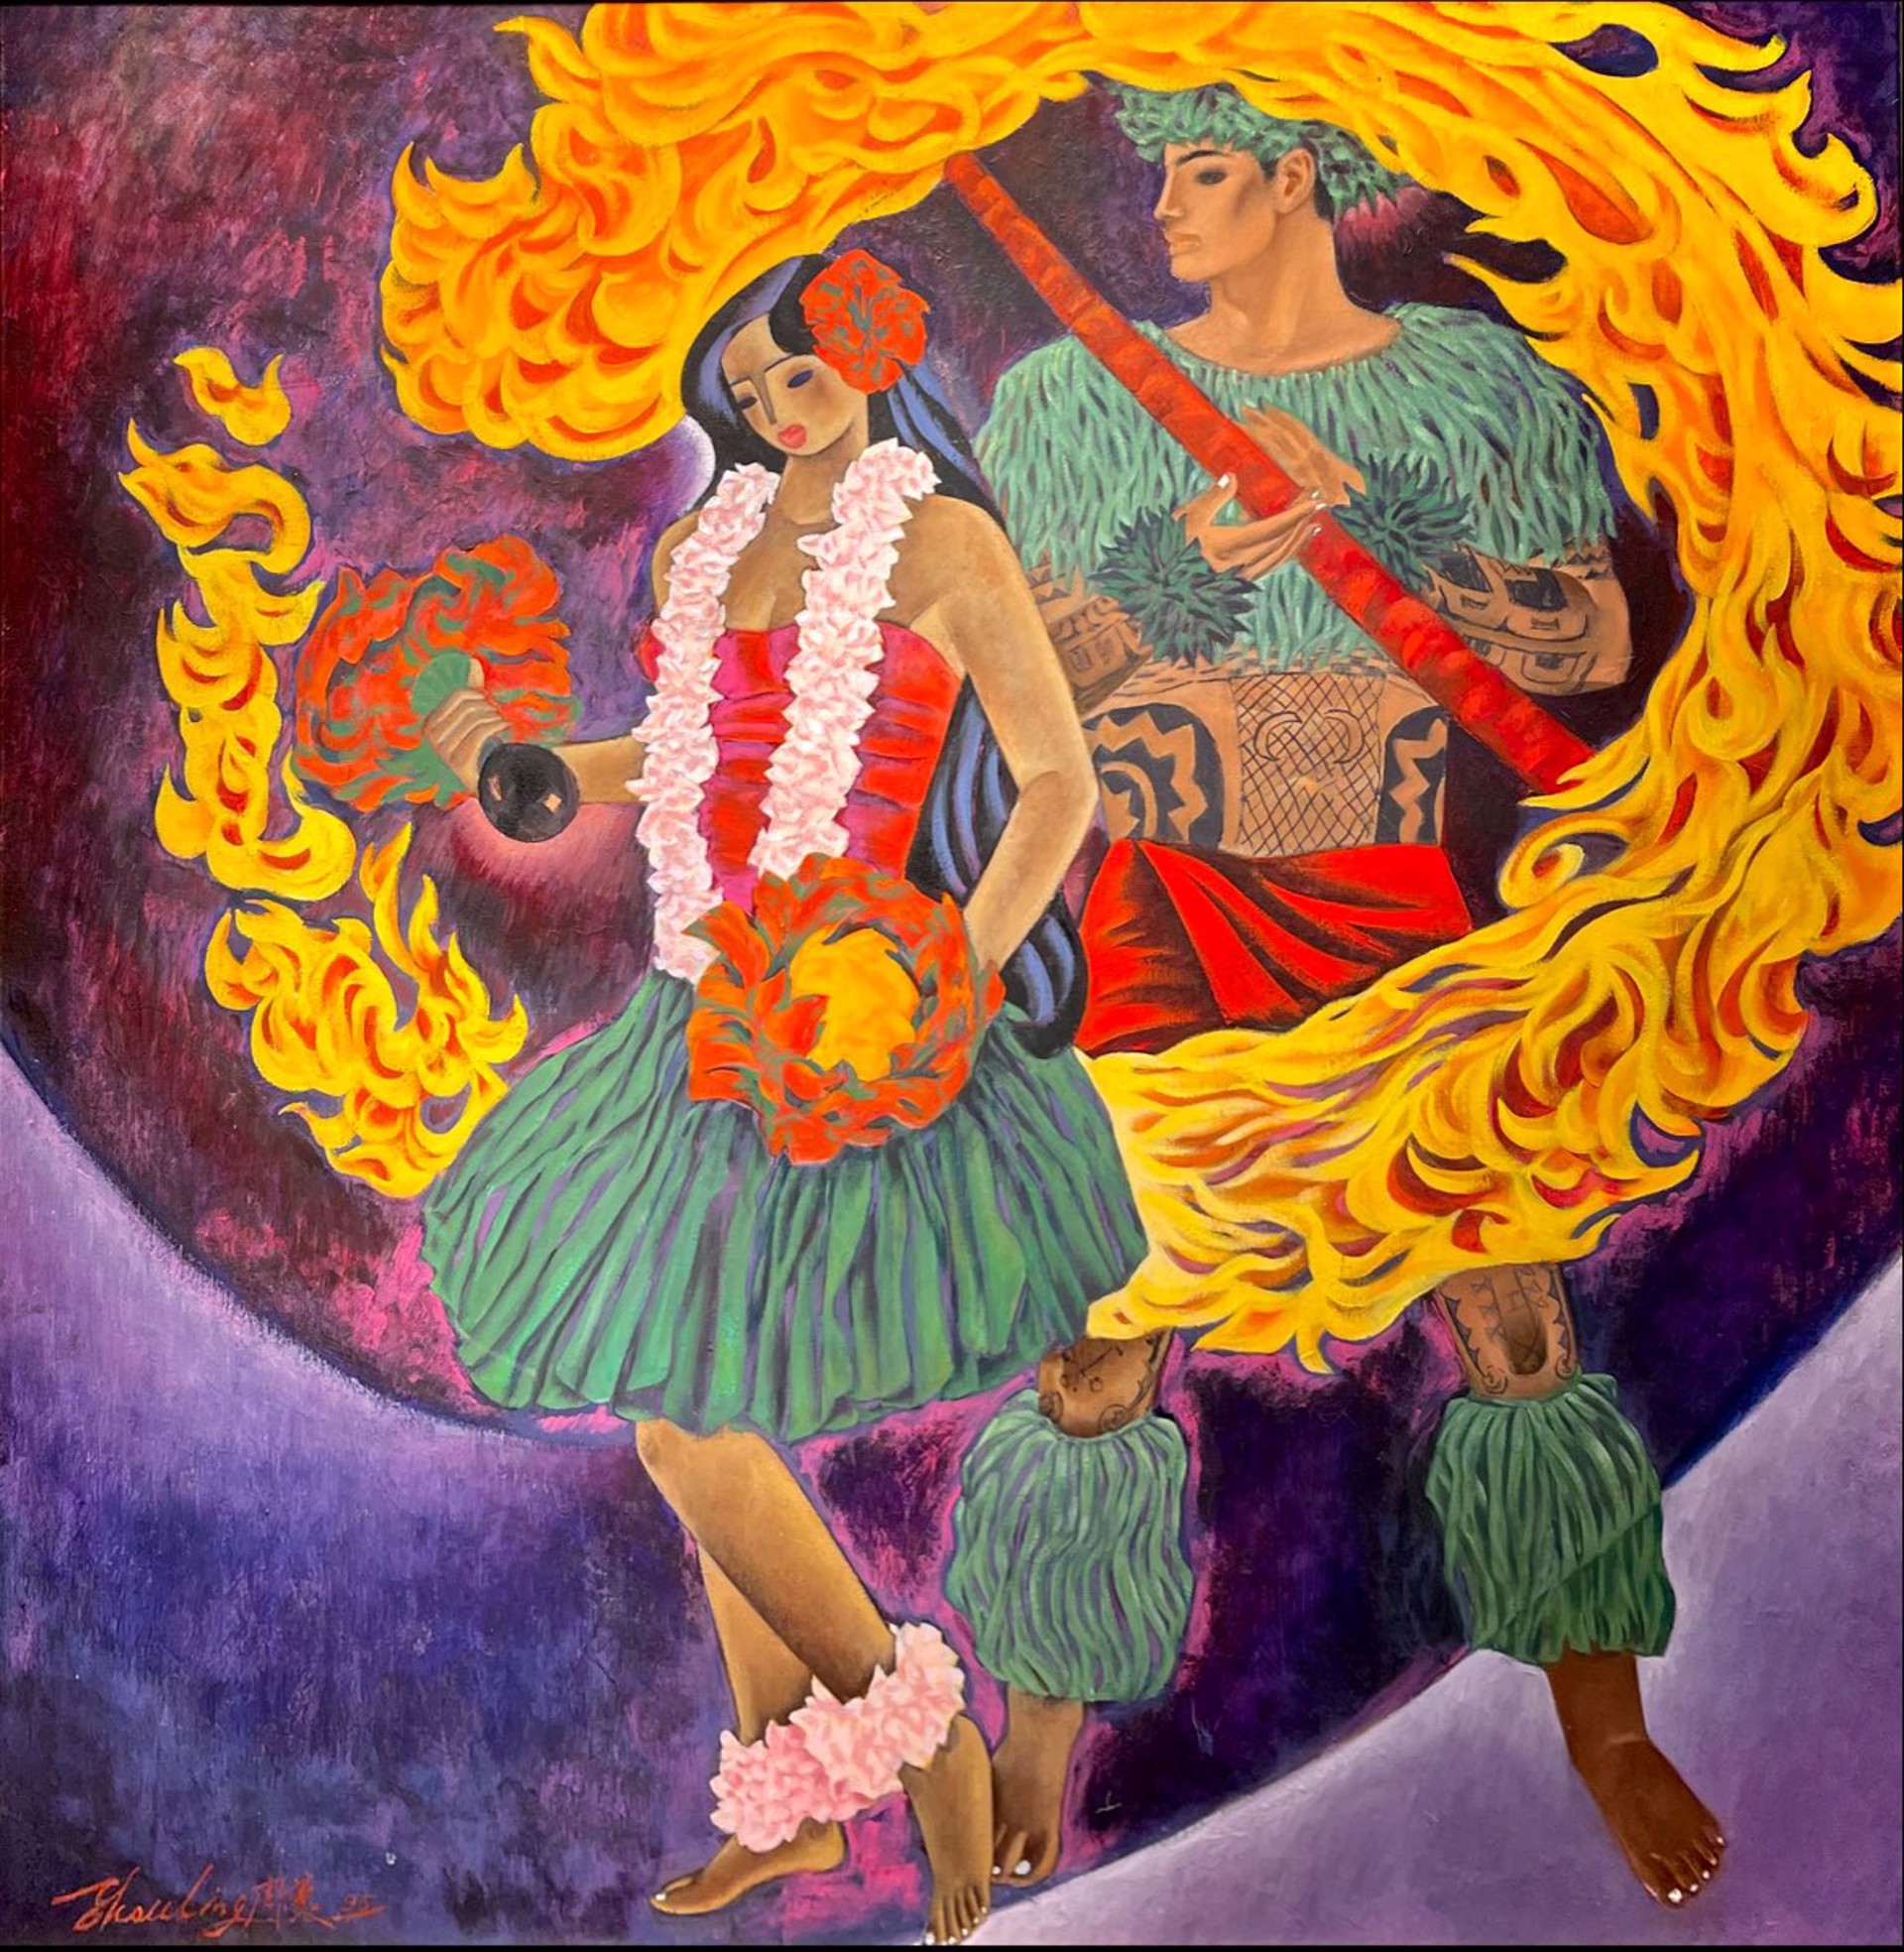 Dance of Fire by Zhou Ling